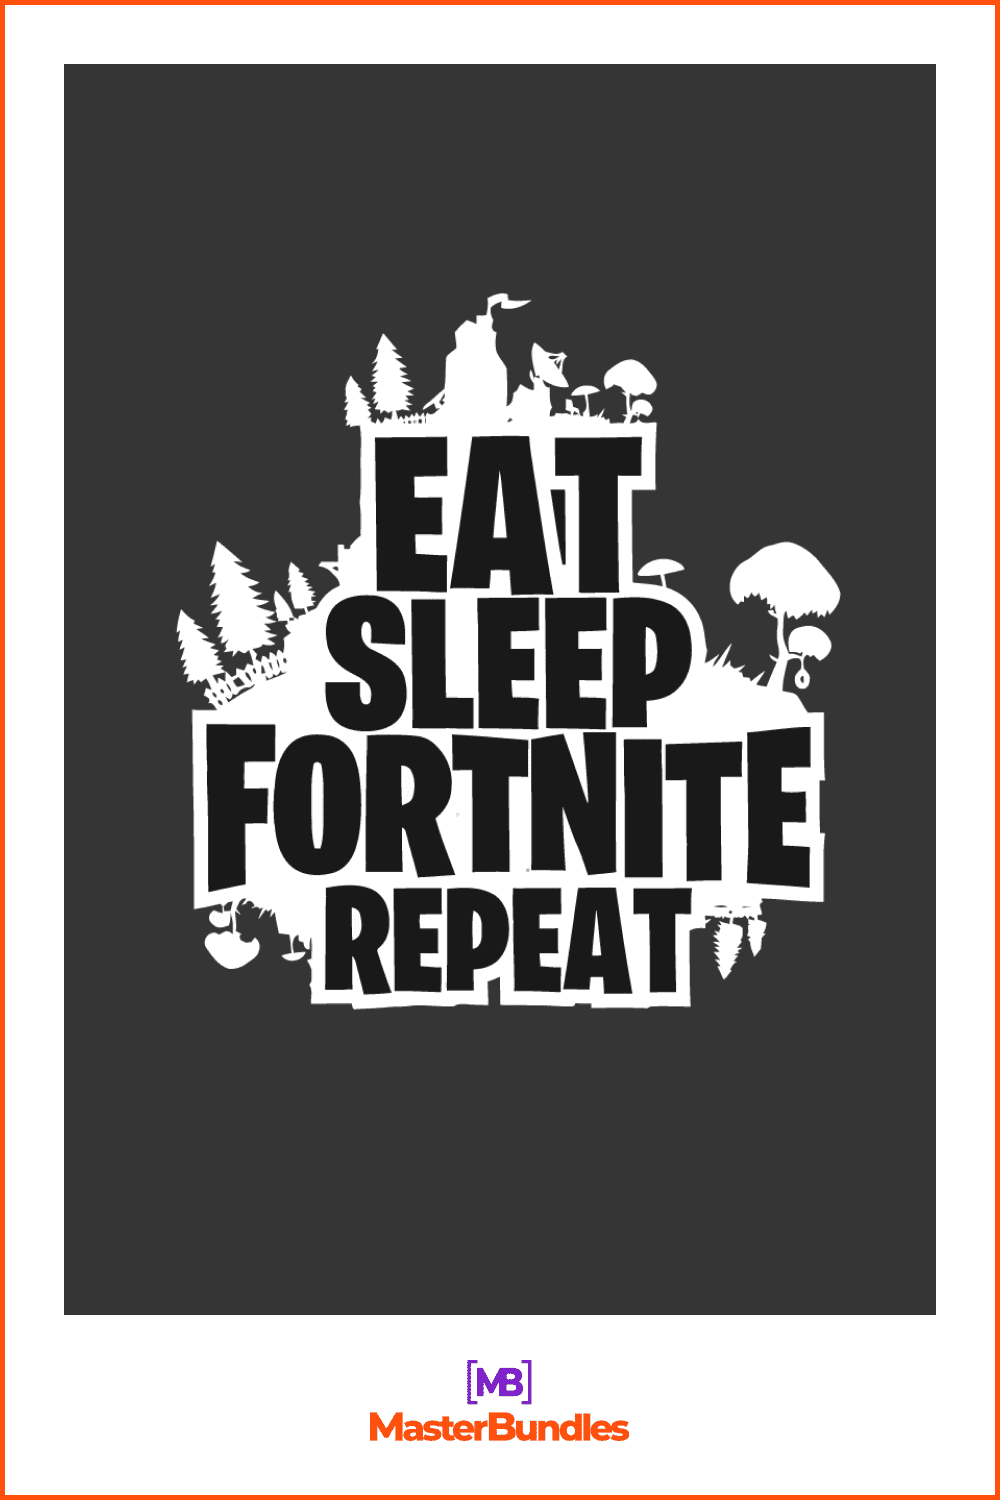 Free SVG cut file of the design: eat sleep Fortnite repeat.